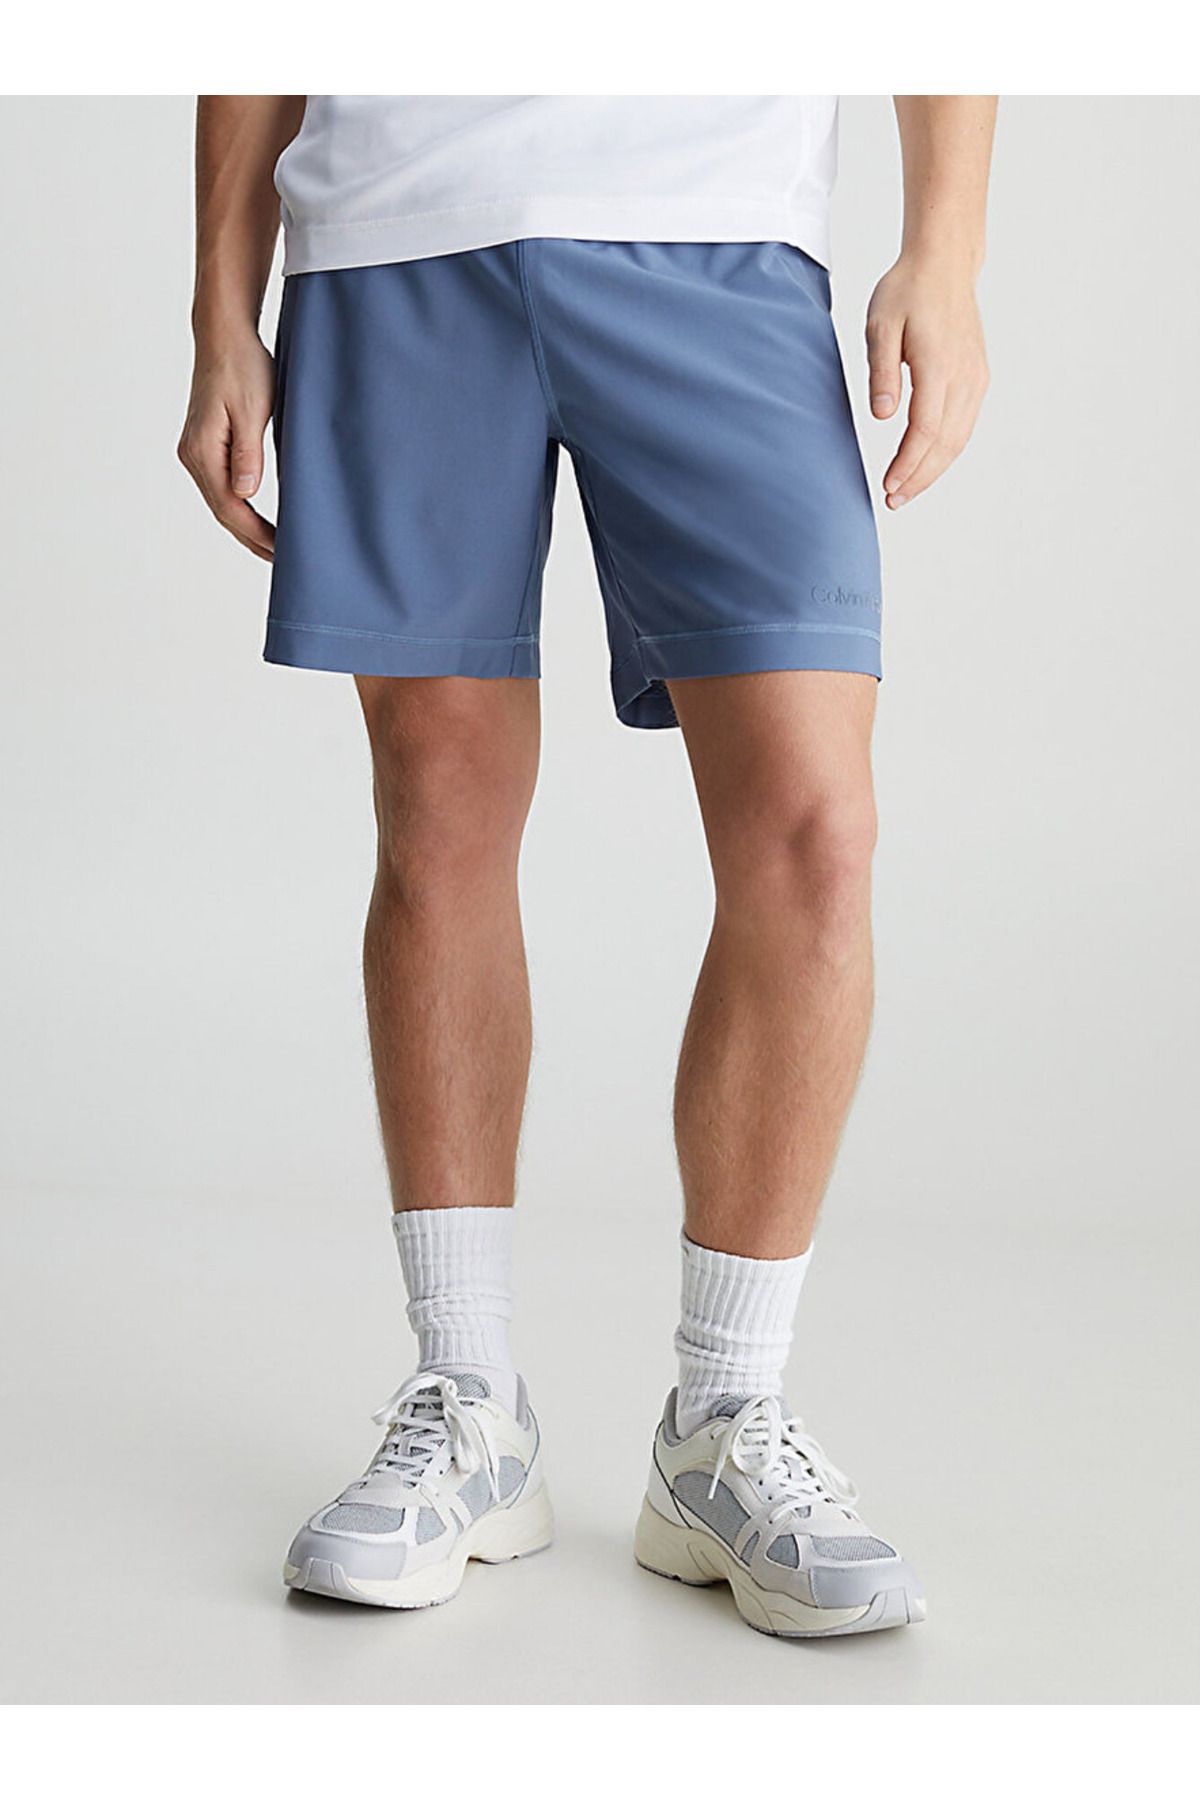 Calvin Klein Gym Shorts